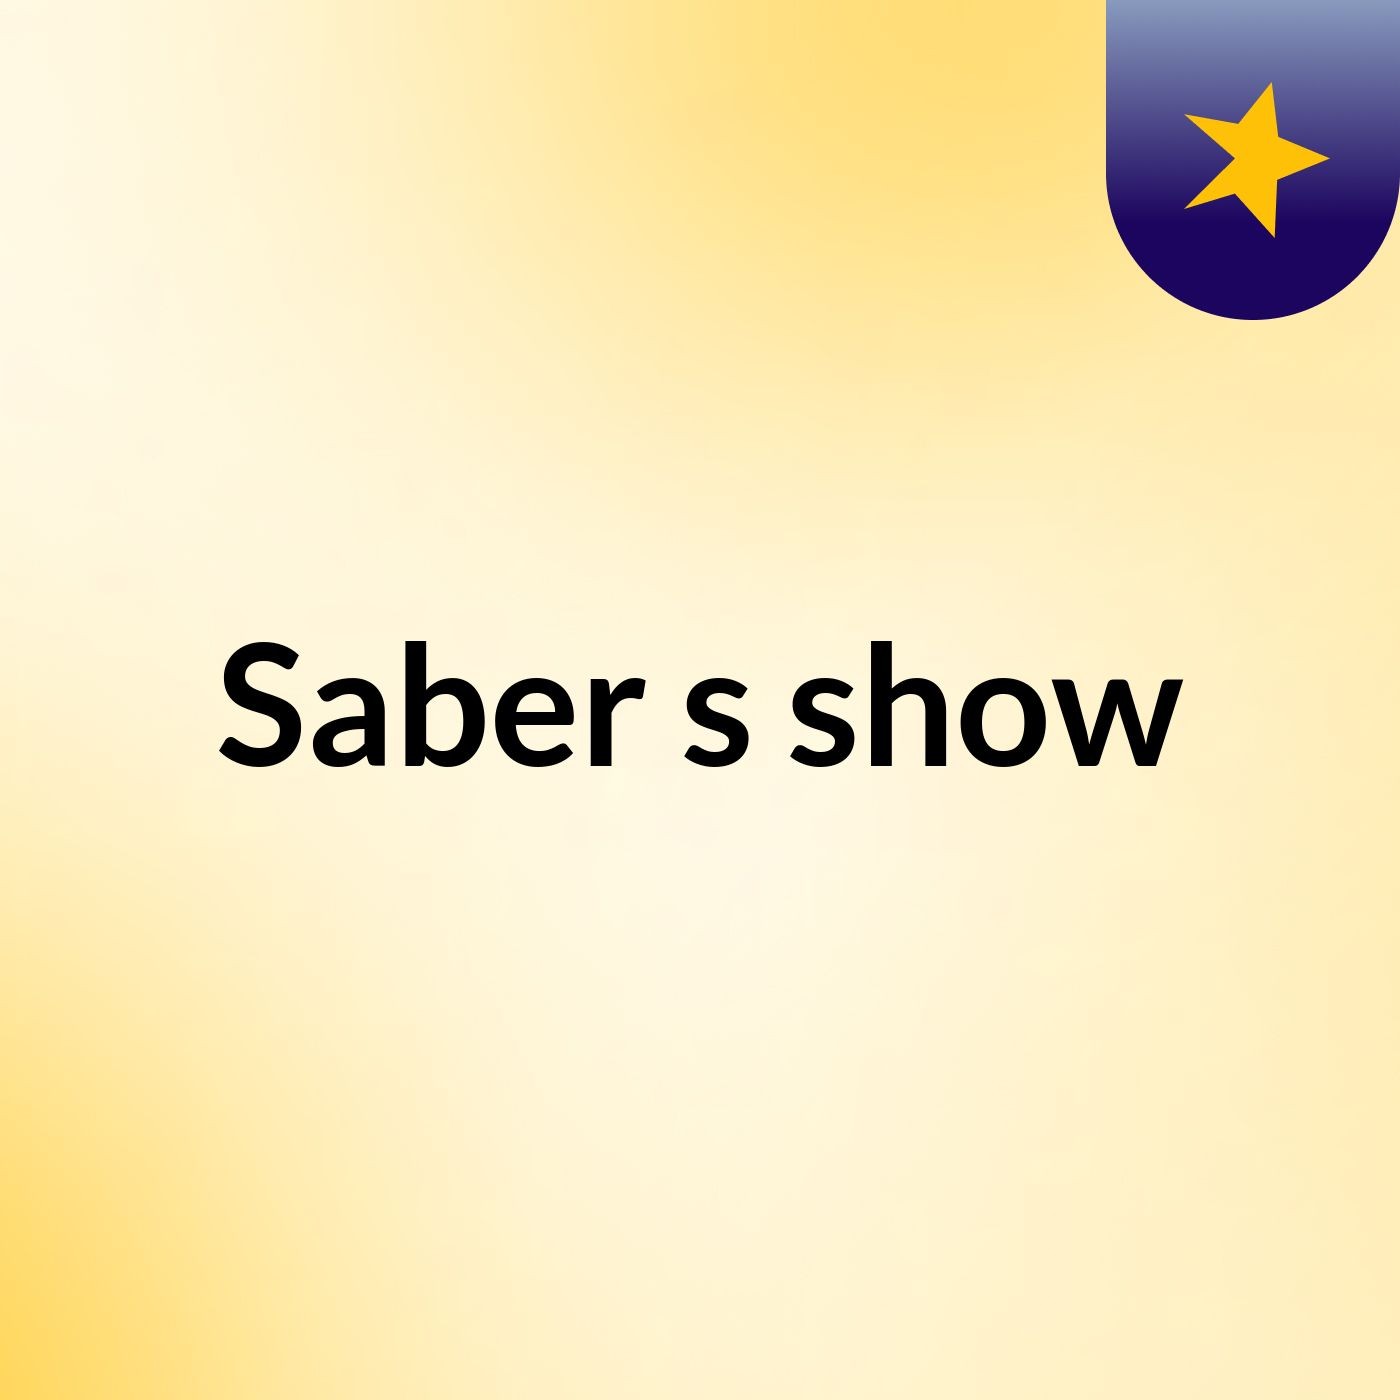 Episode 1 - Saber's show